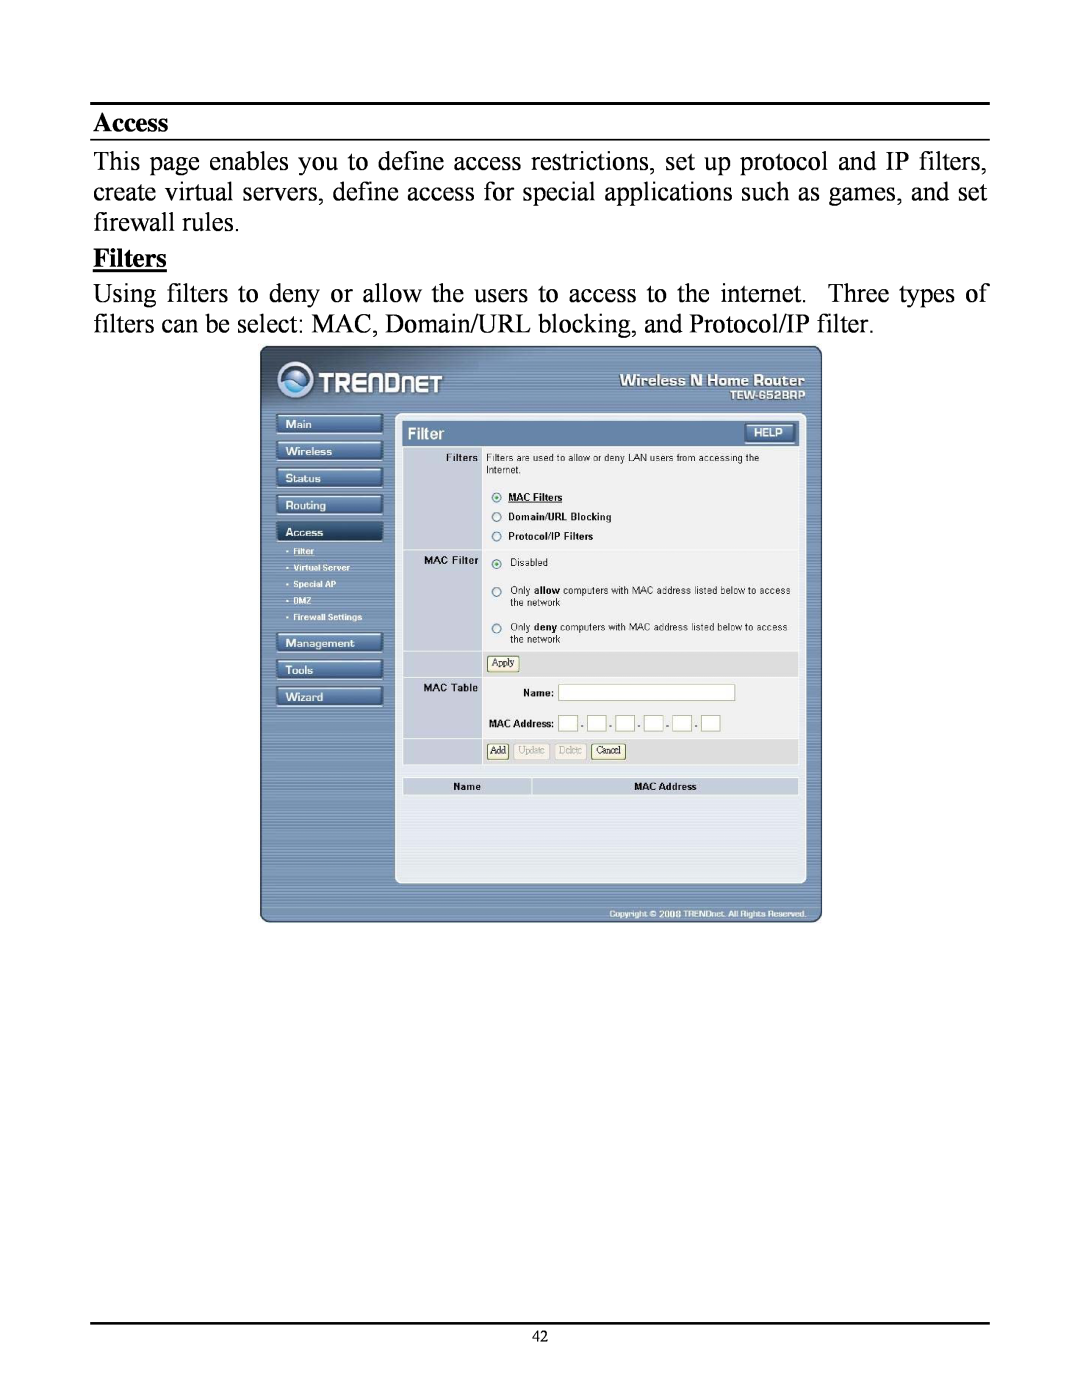 TRENDnet TEW-652BRP manual Access, Filters 